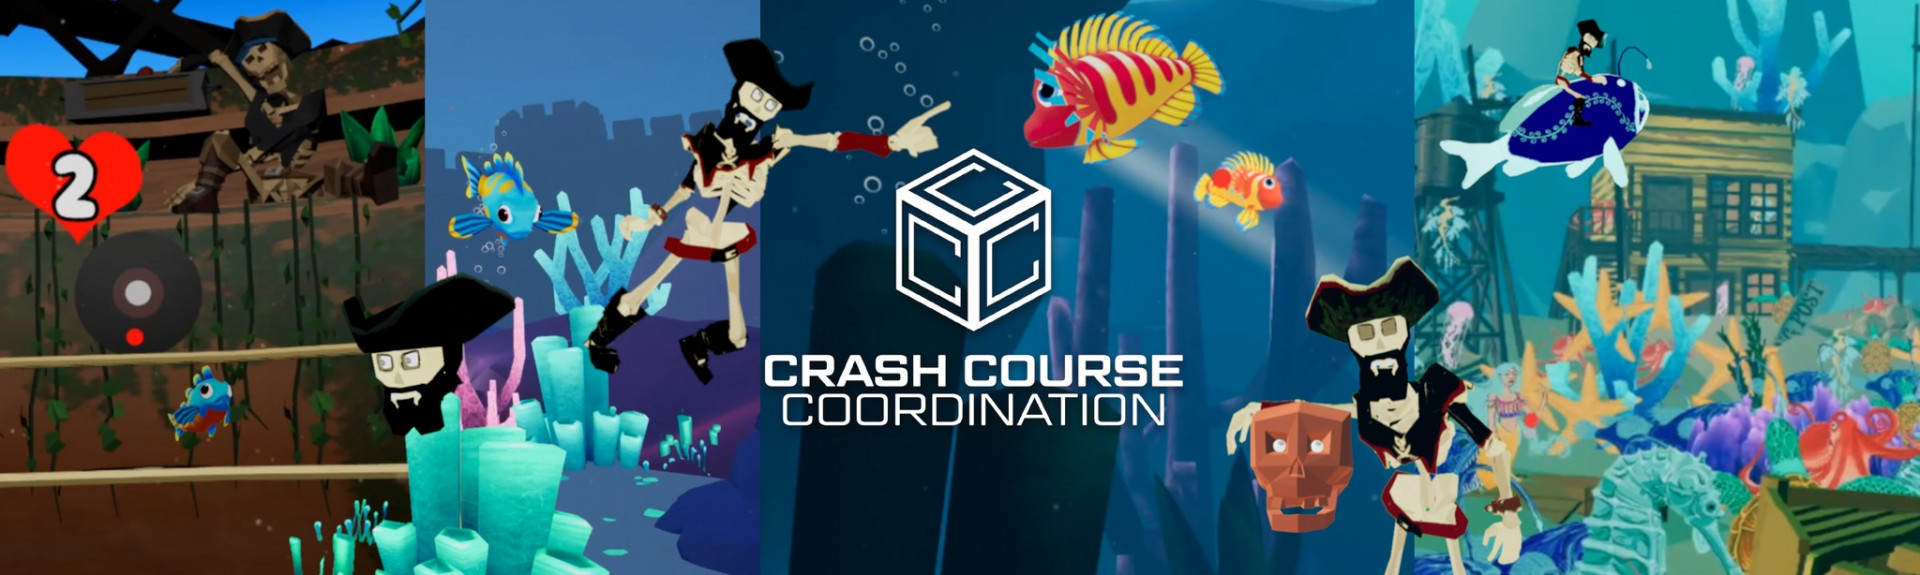 Crash Course Coordination